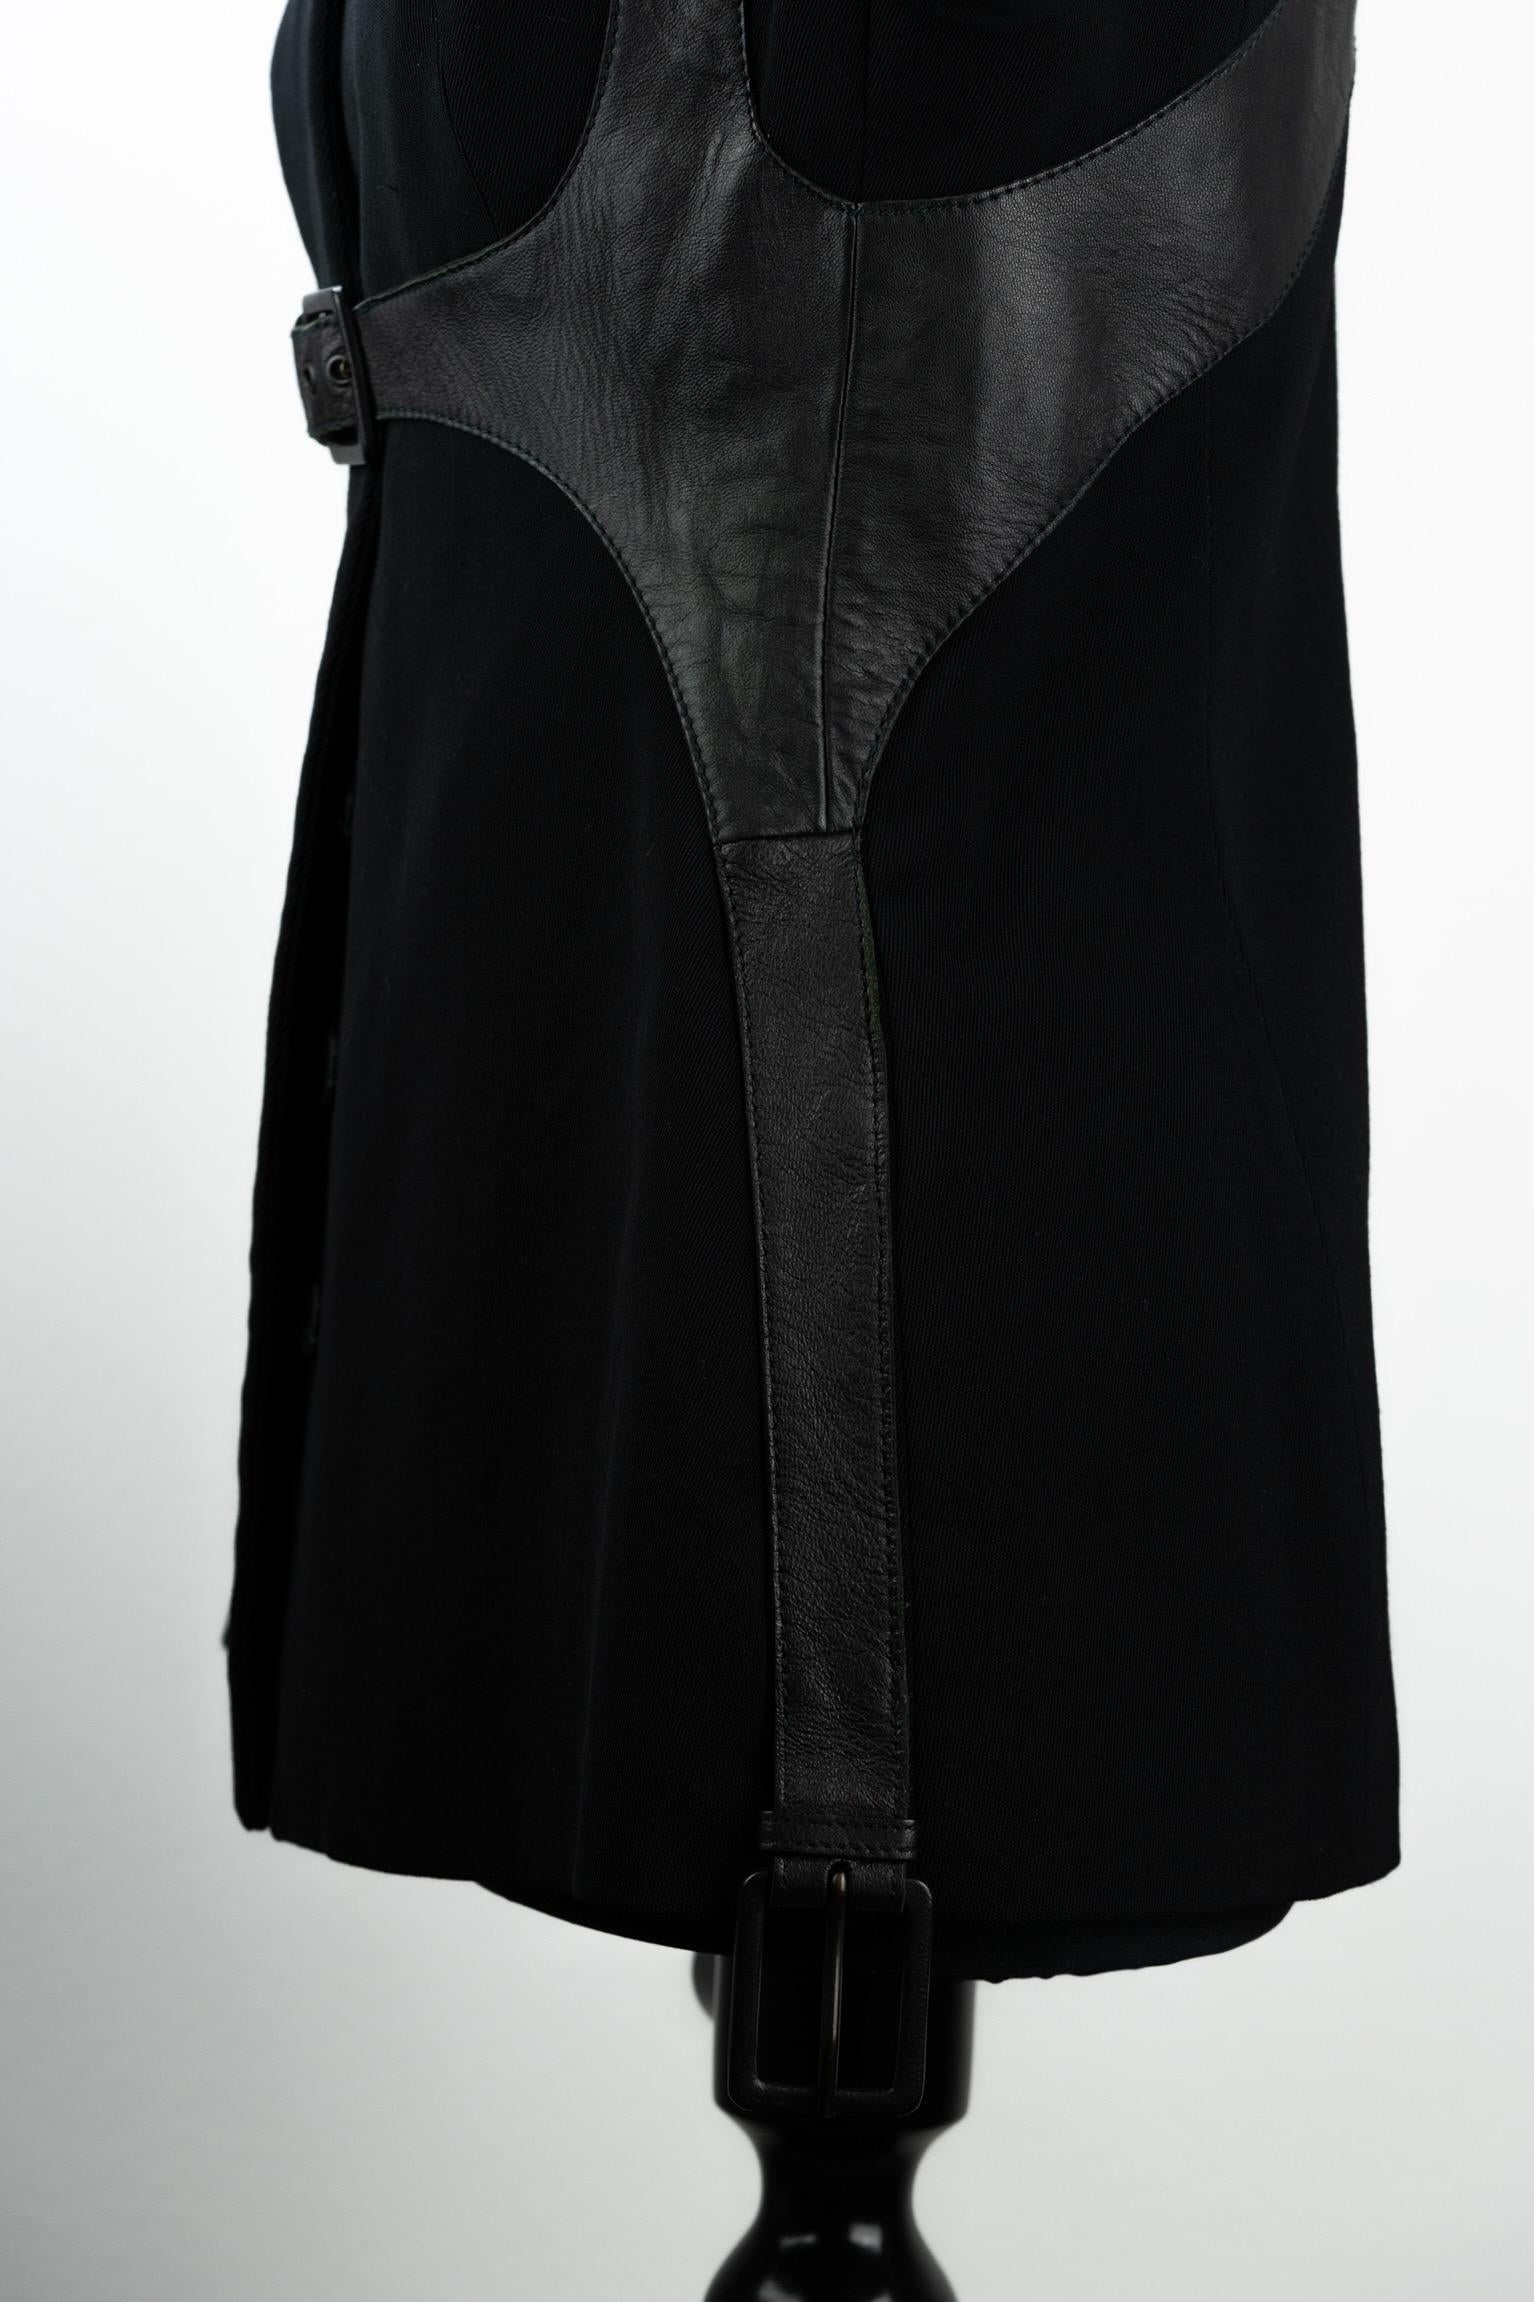 Alexander McQueen 2002 Supercalifragilistic Wool Black Leather Harness Jacket. 2